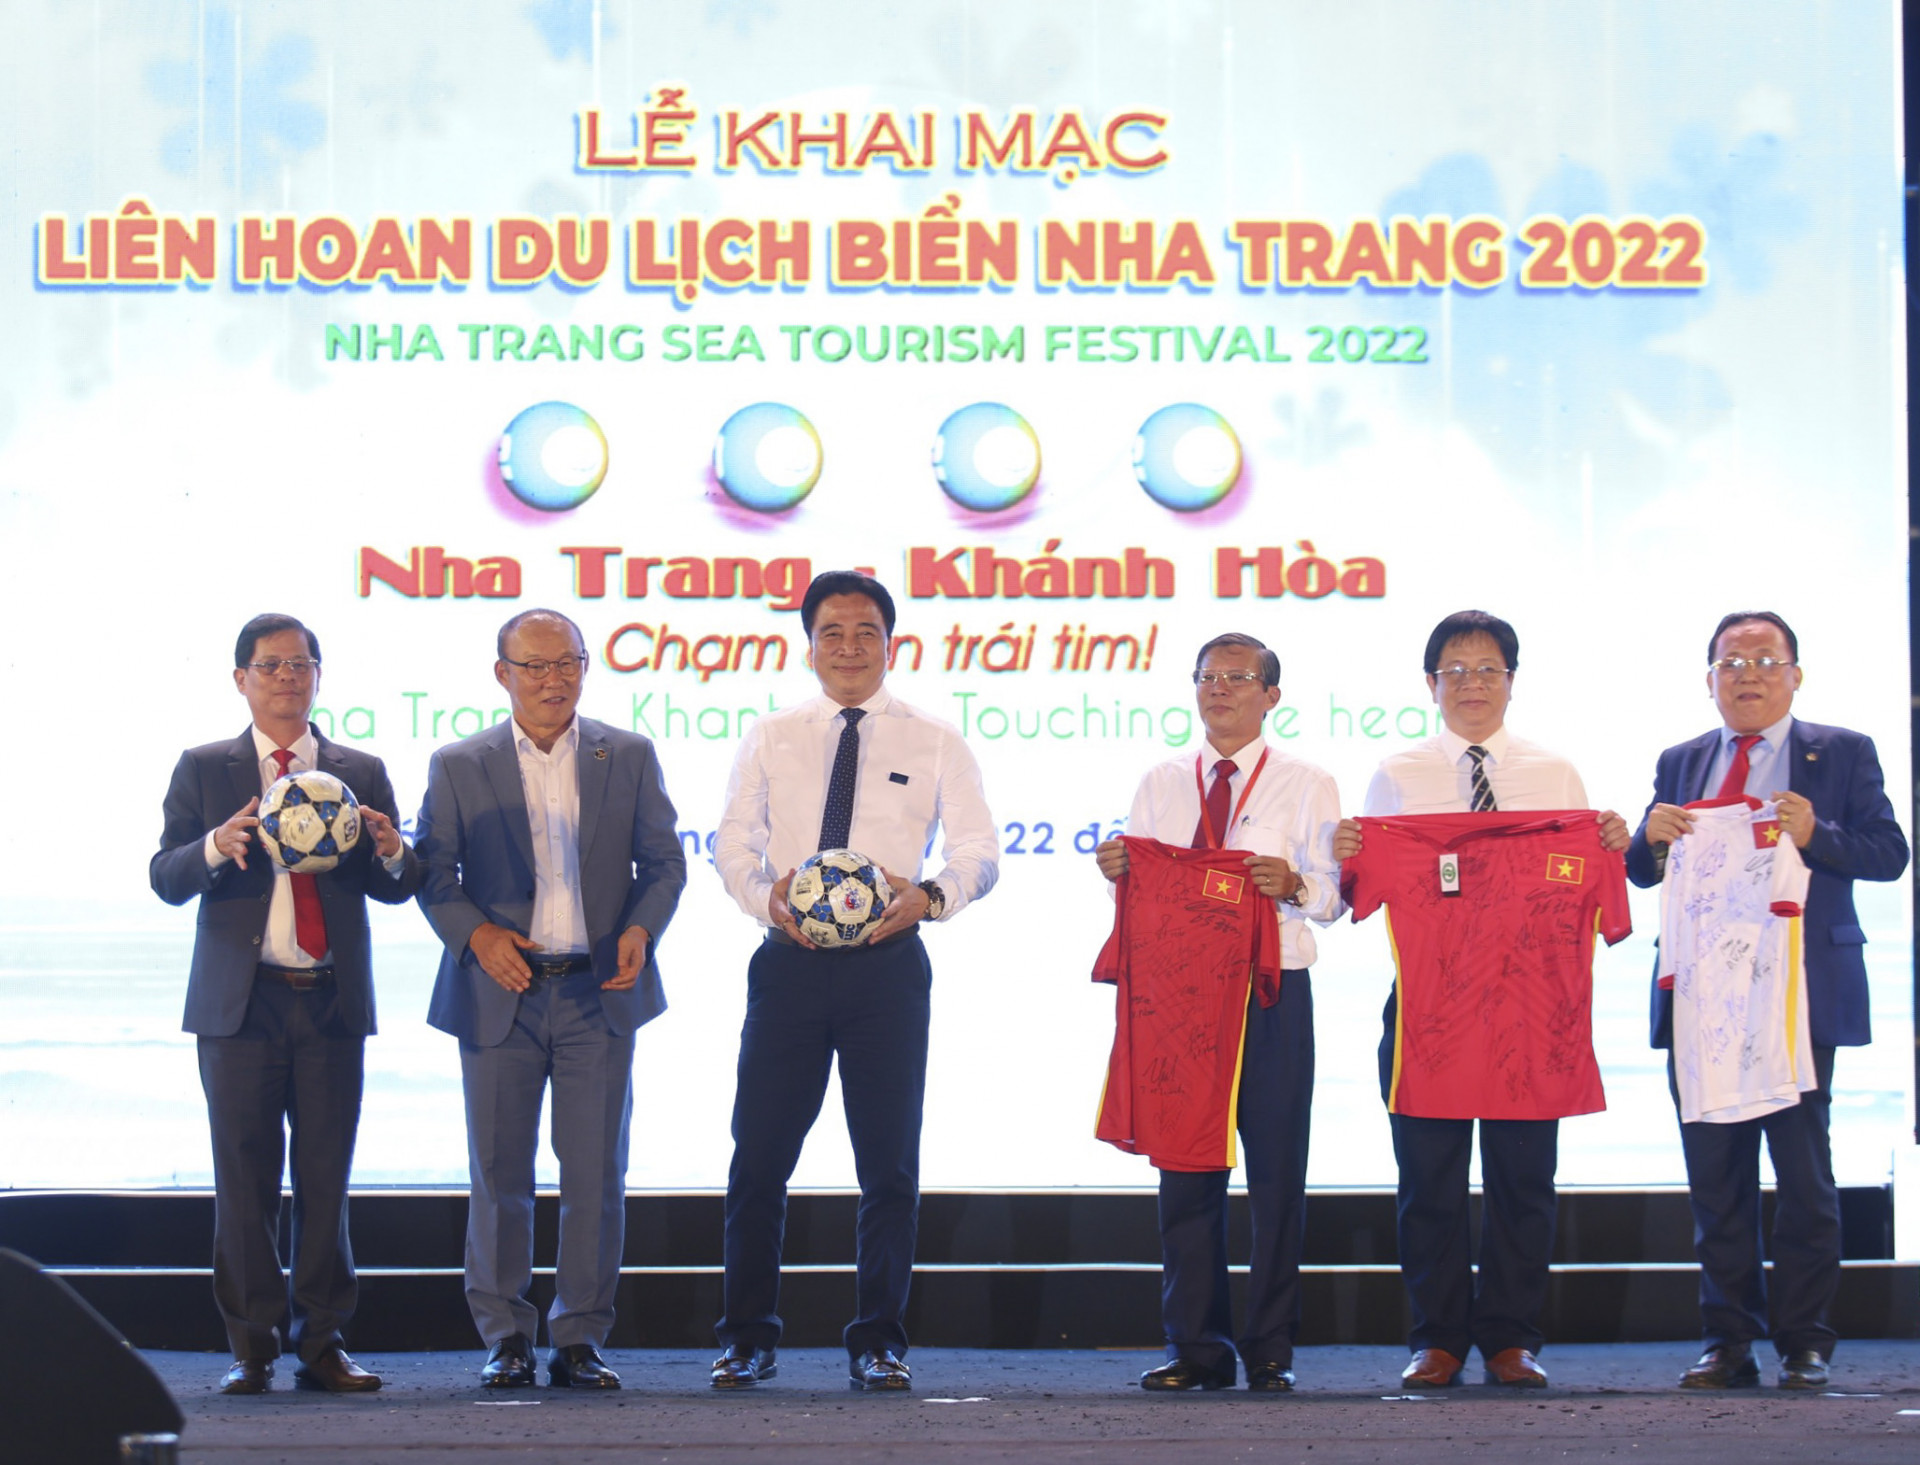 Coach Park Hang Seo presenting balls and football jerseys to leadership of Khanh Hoa Province